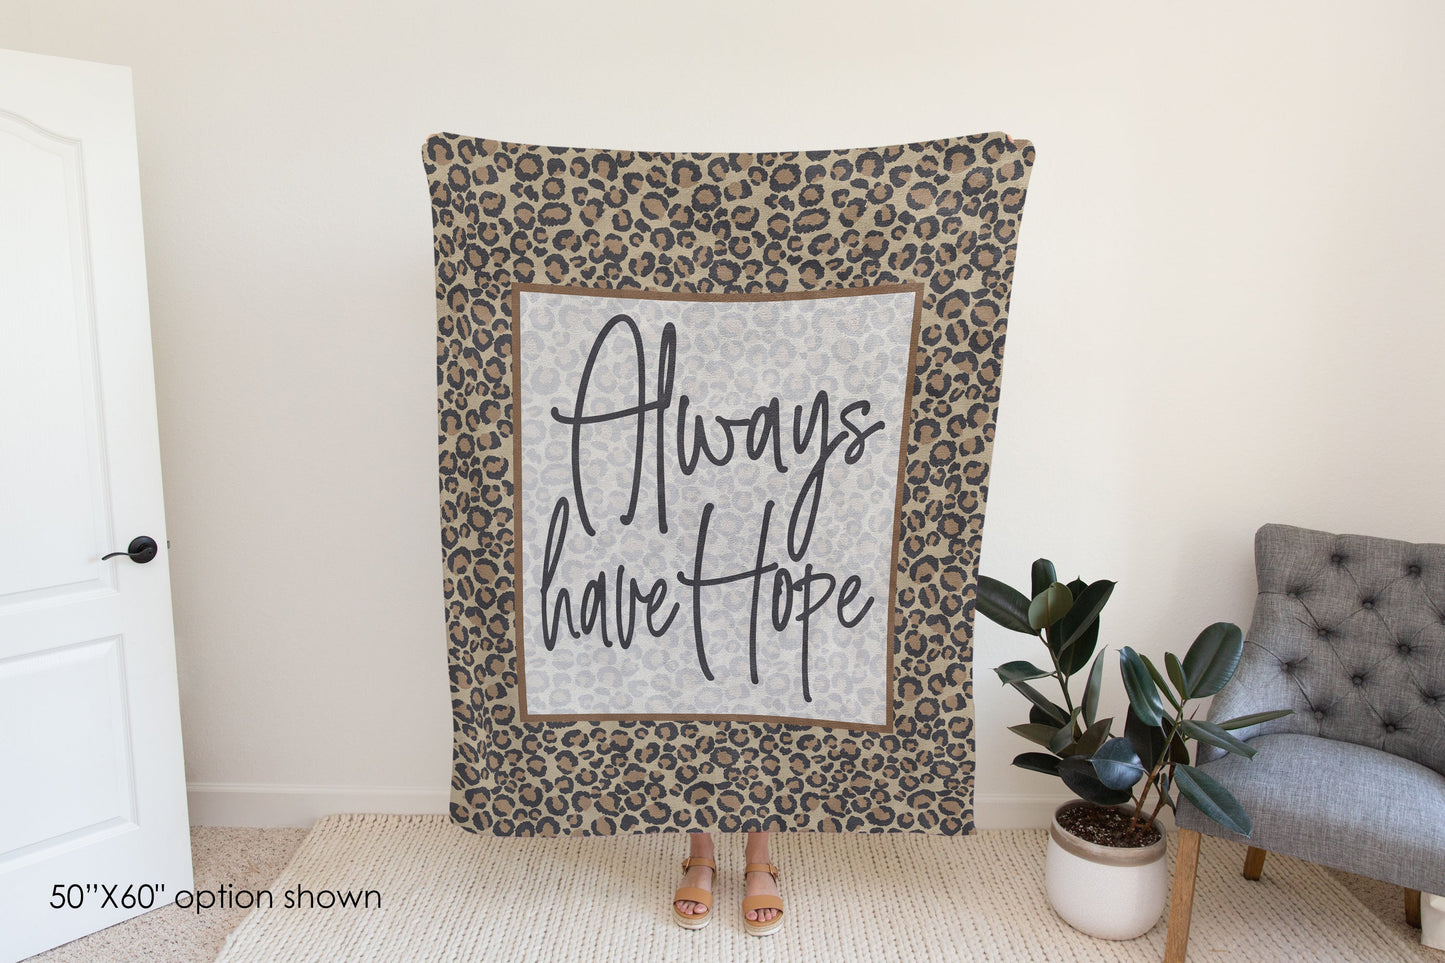 Always Have Hope Leopard Print Inspirational Blanket | Positive Affirmations Blanket-Luxe Palette